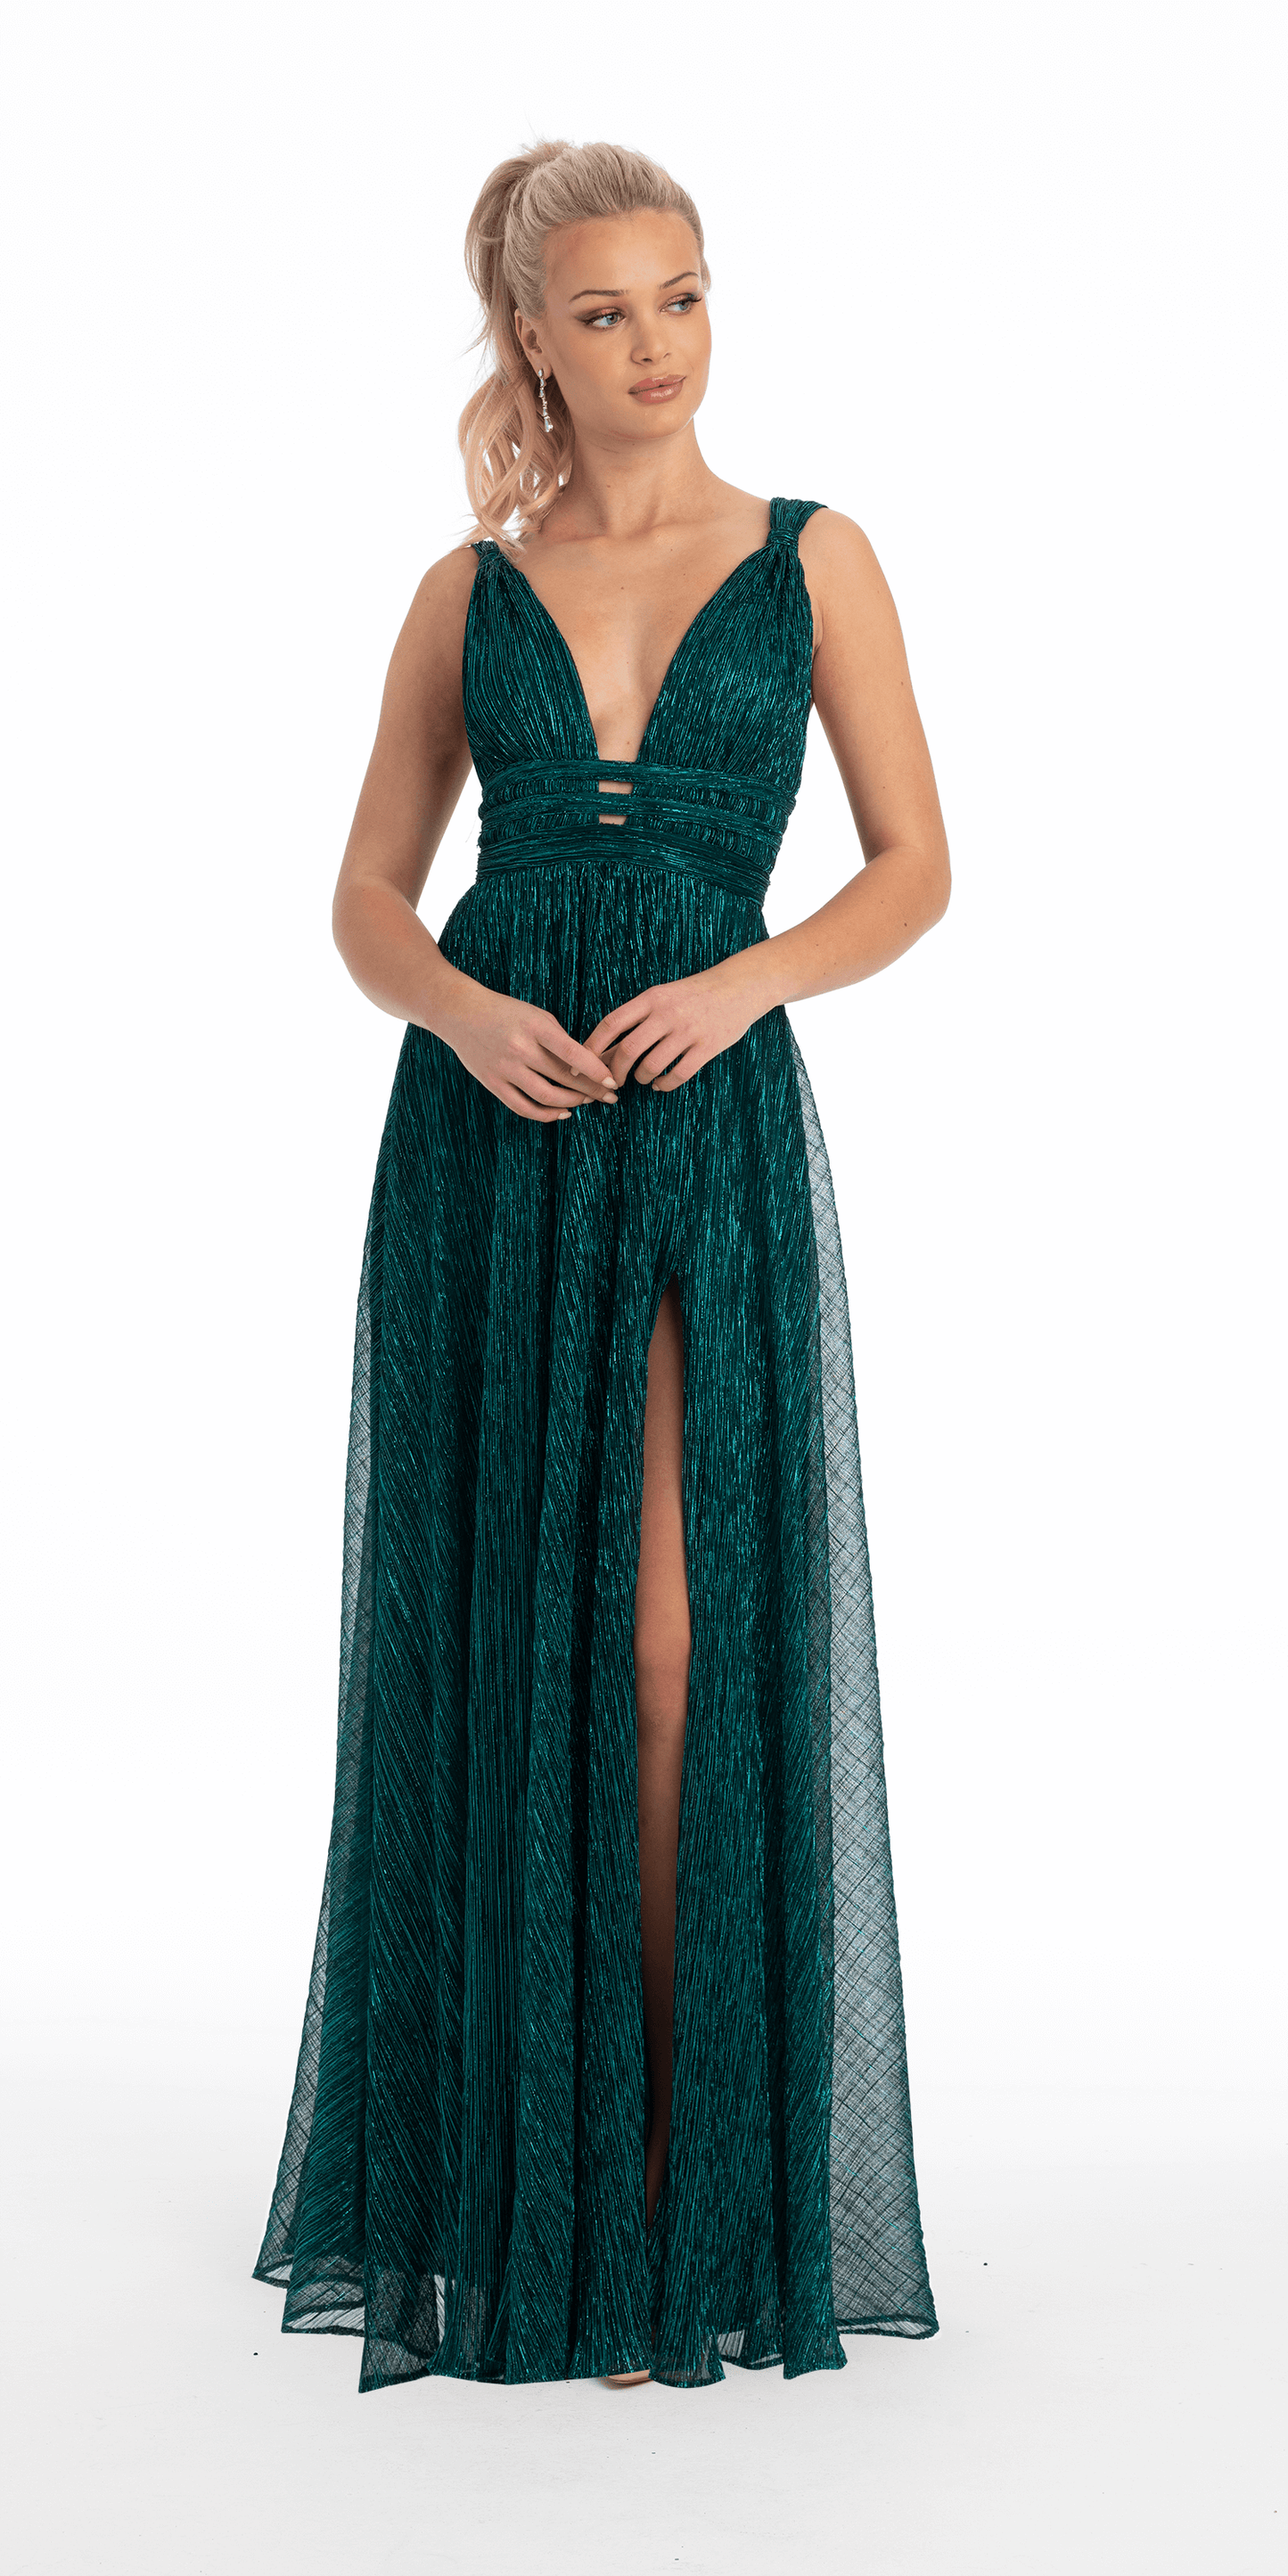 Camille La Vie Metallic Crinkle Grecian Tank  Plunge Dress missy / 0 / emerald